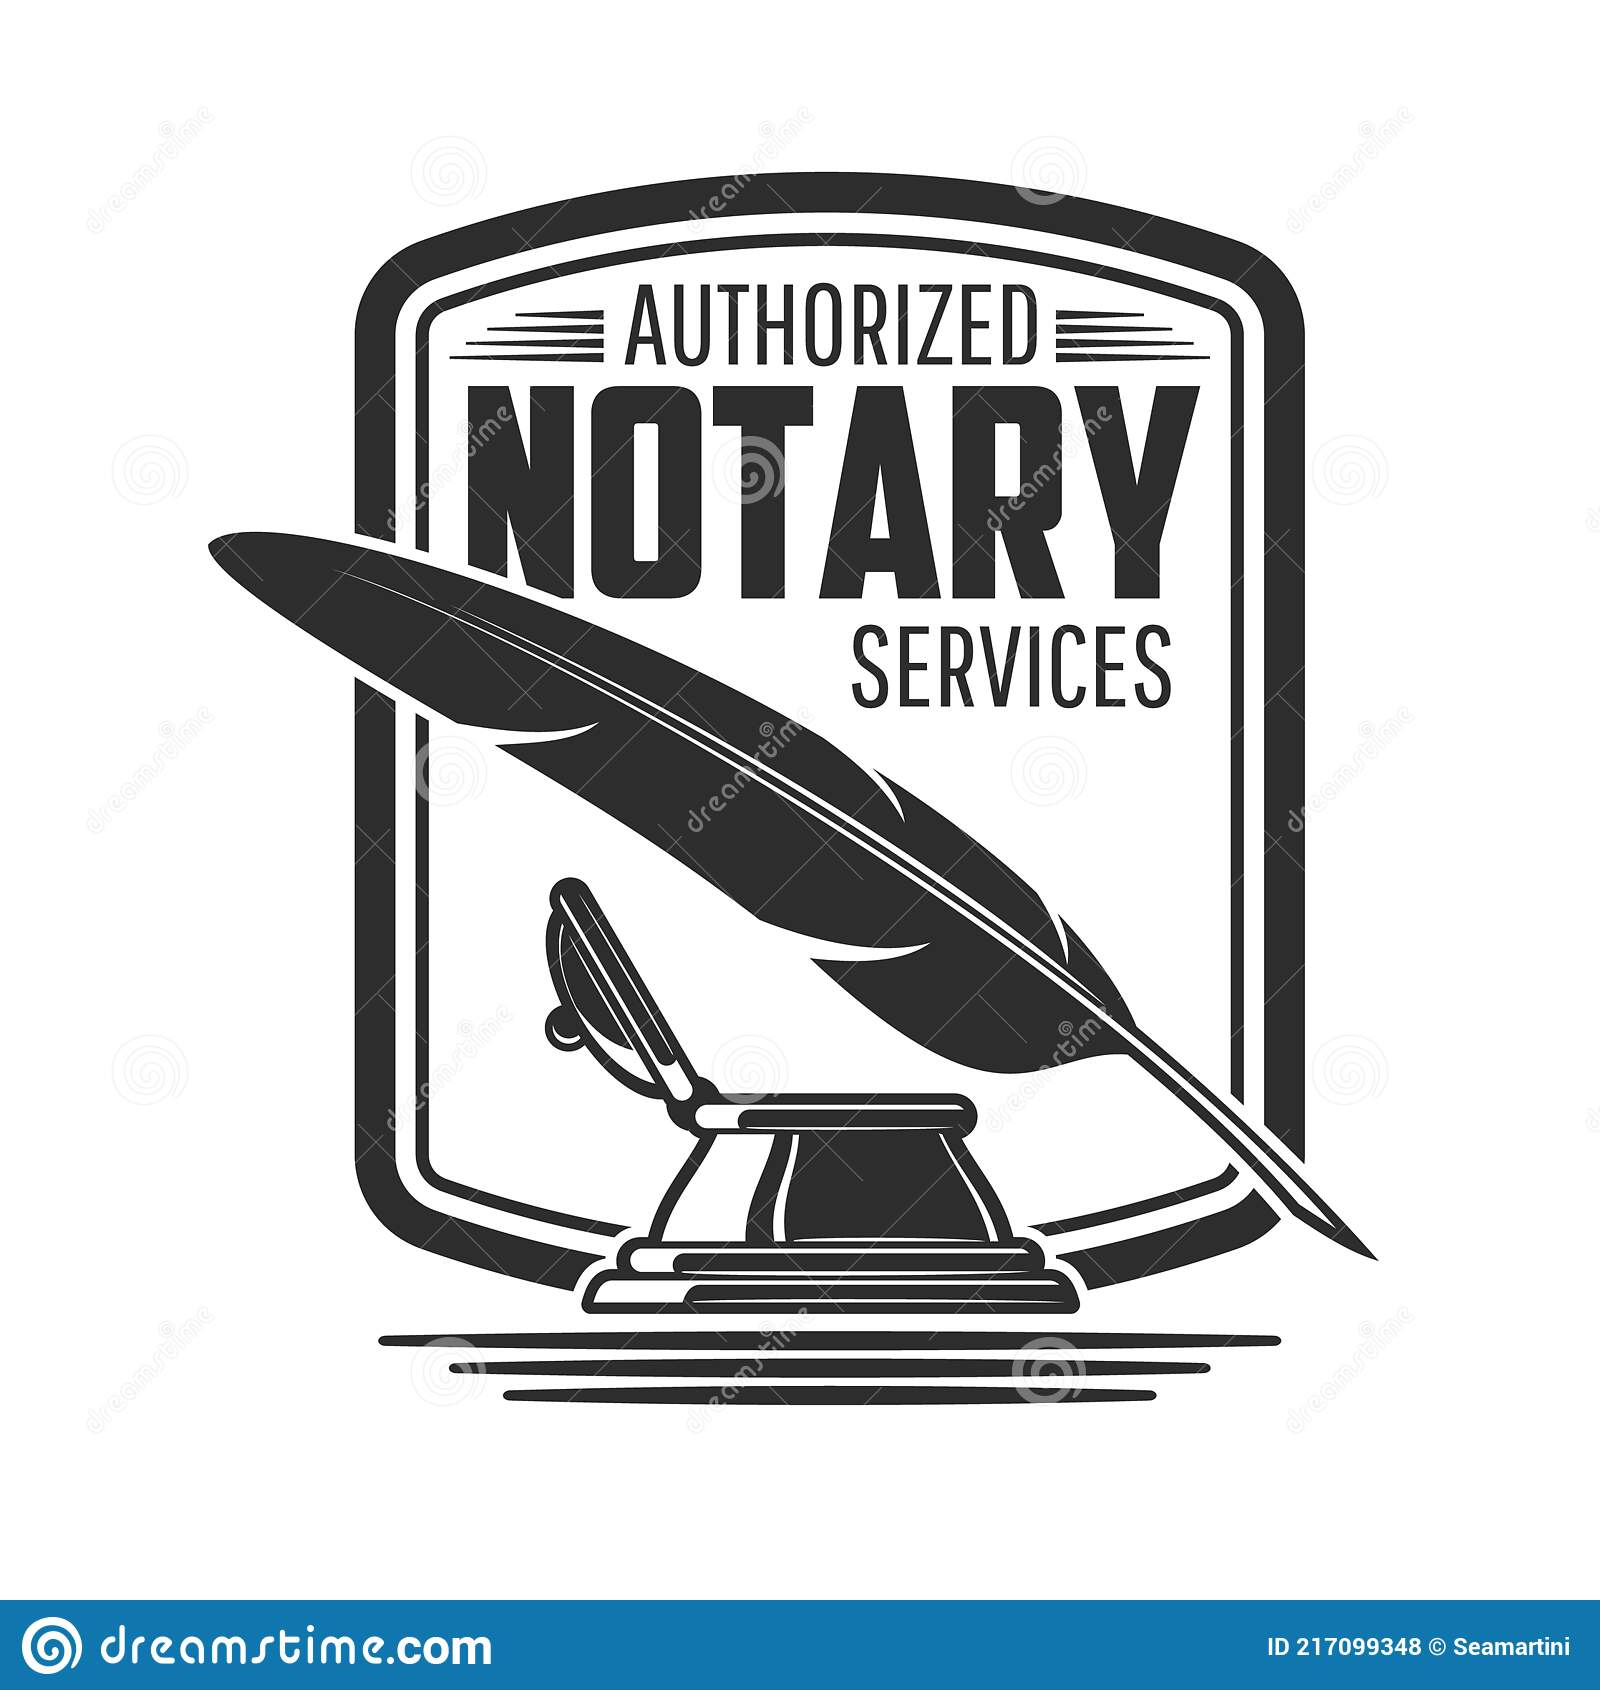 SriBindu Notary Public /Mobile Notary